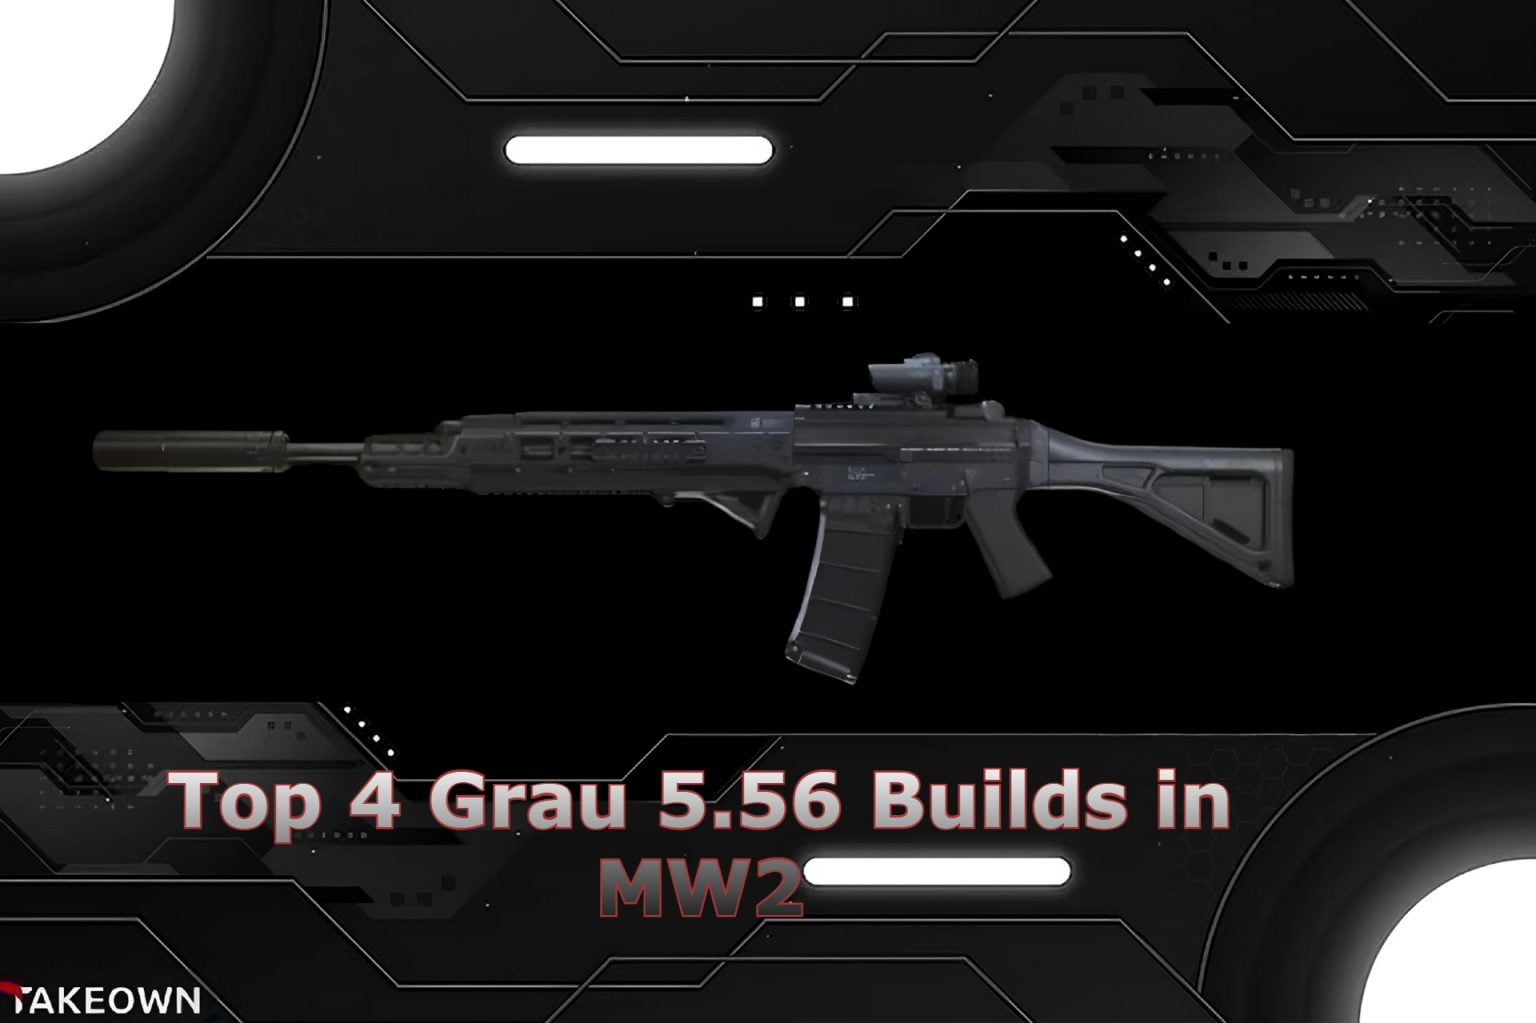 Top 4 Grau 5.56 Builds in MW2